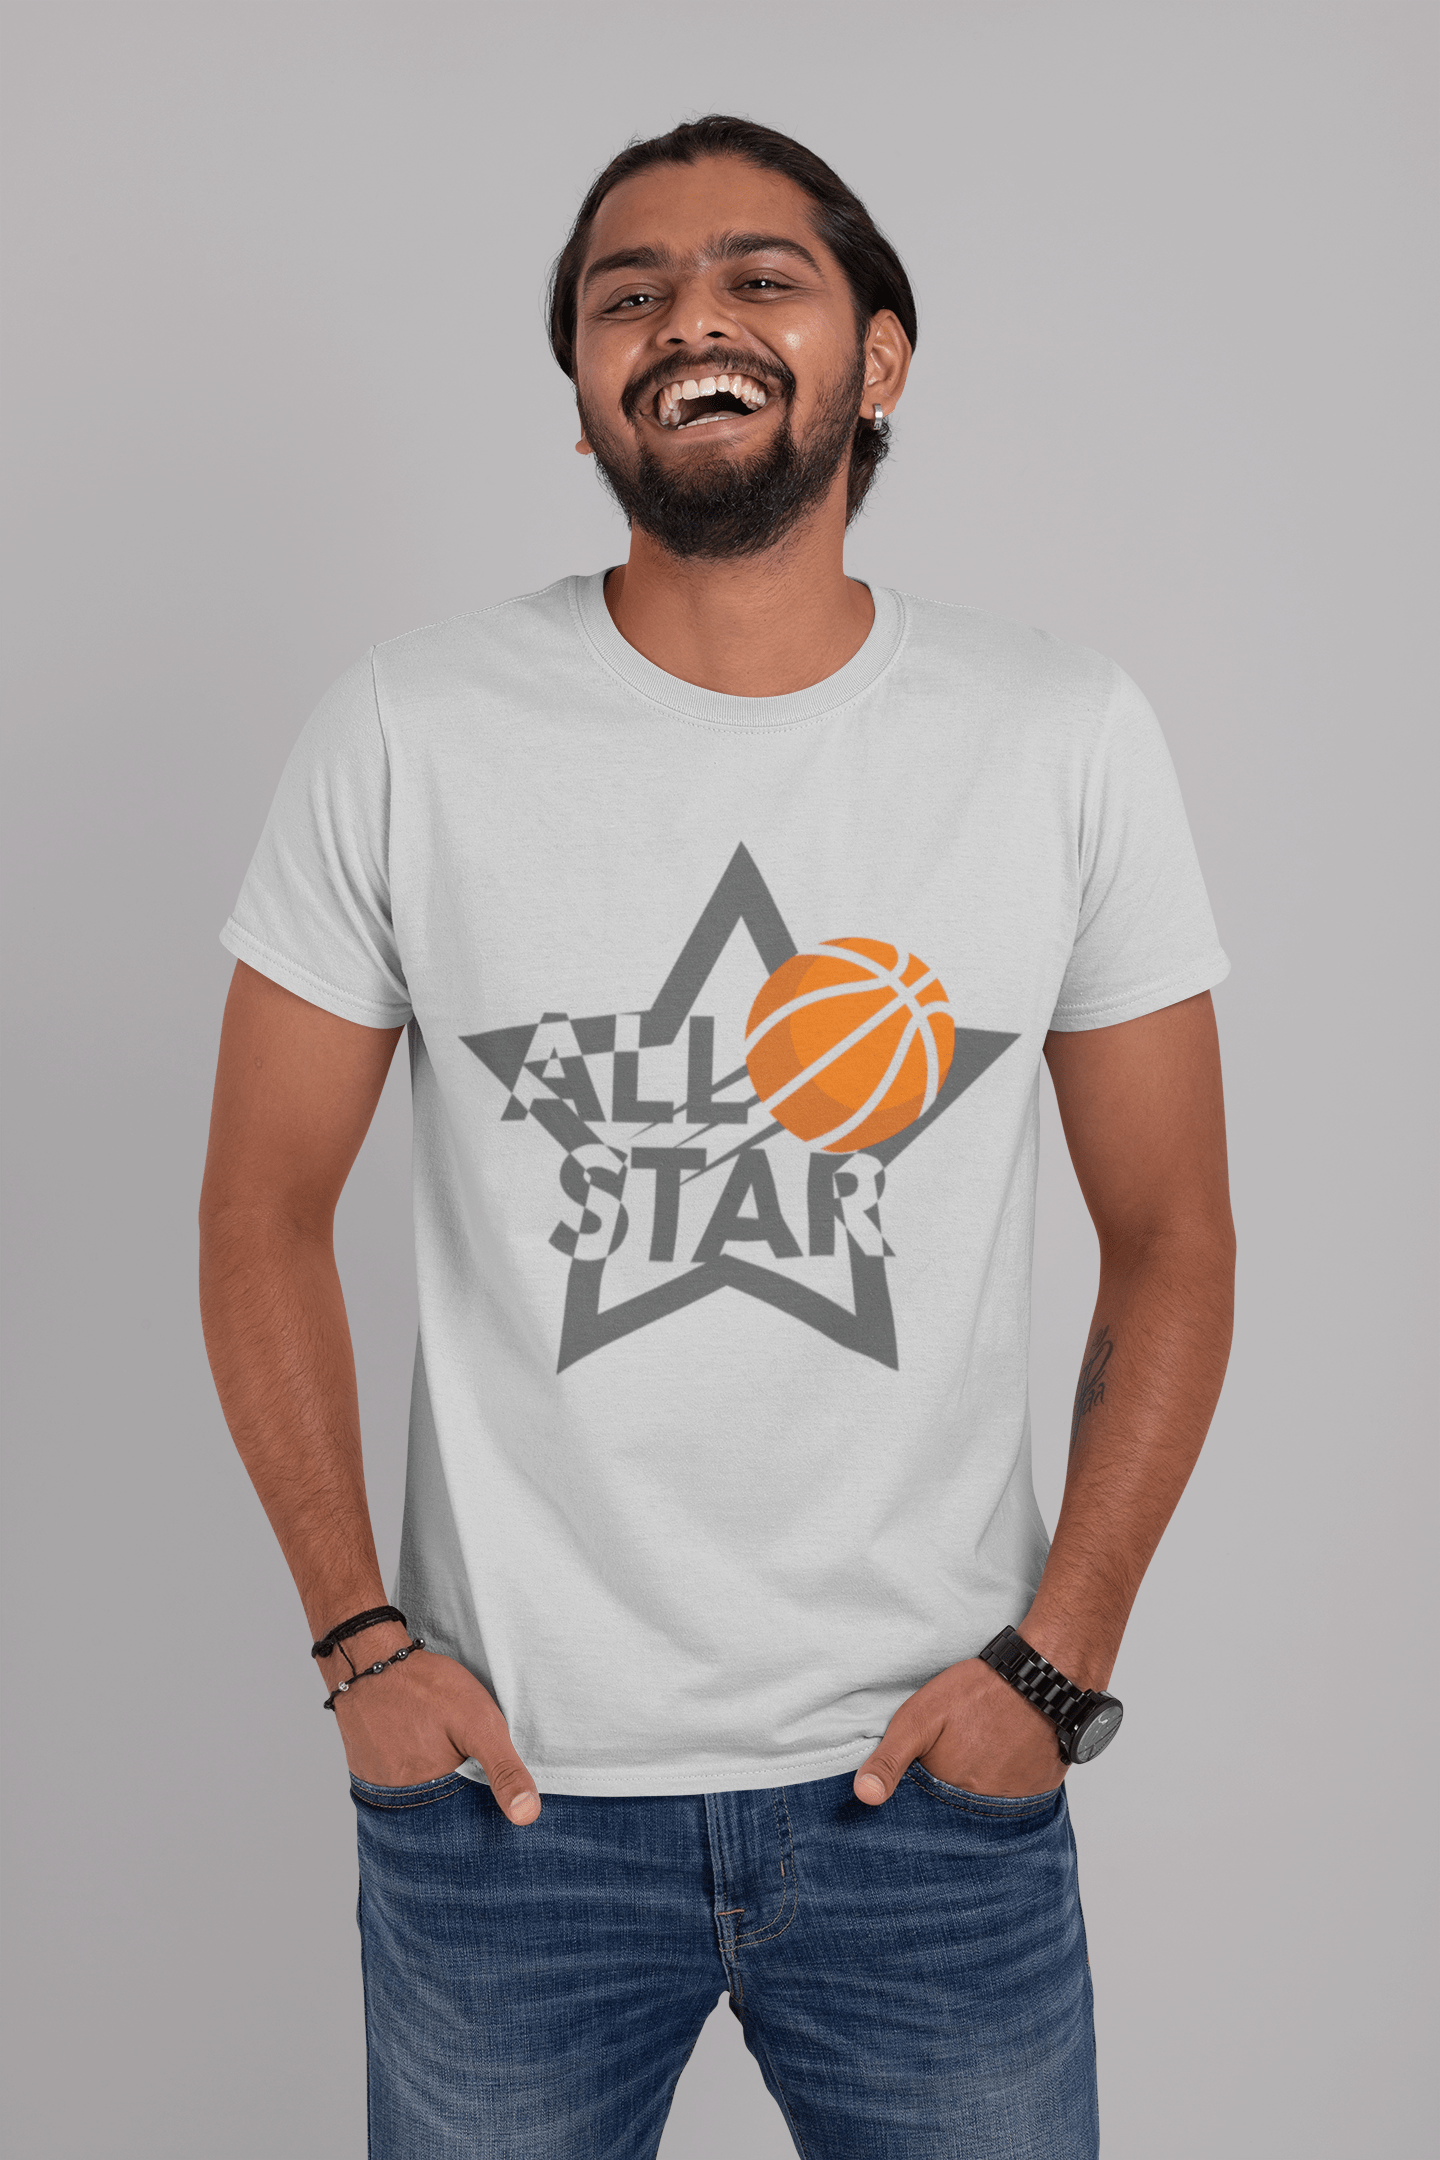 Men's Graphic T-Shirt All Star Basketball Vintage White Round Neck Round Neck